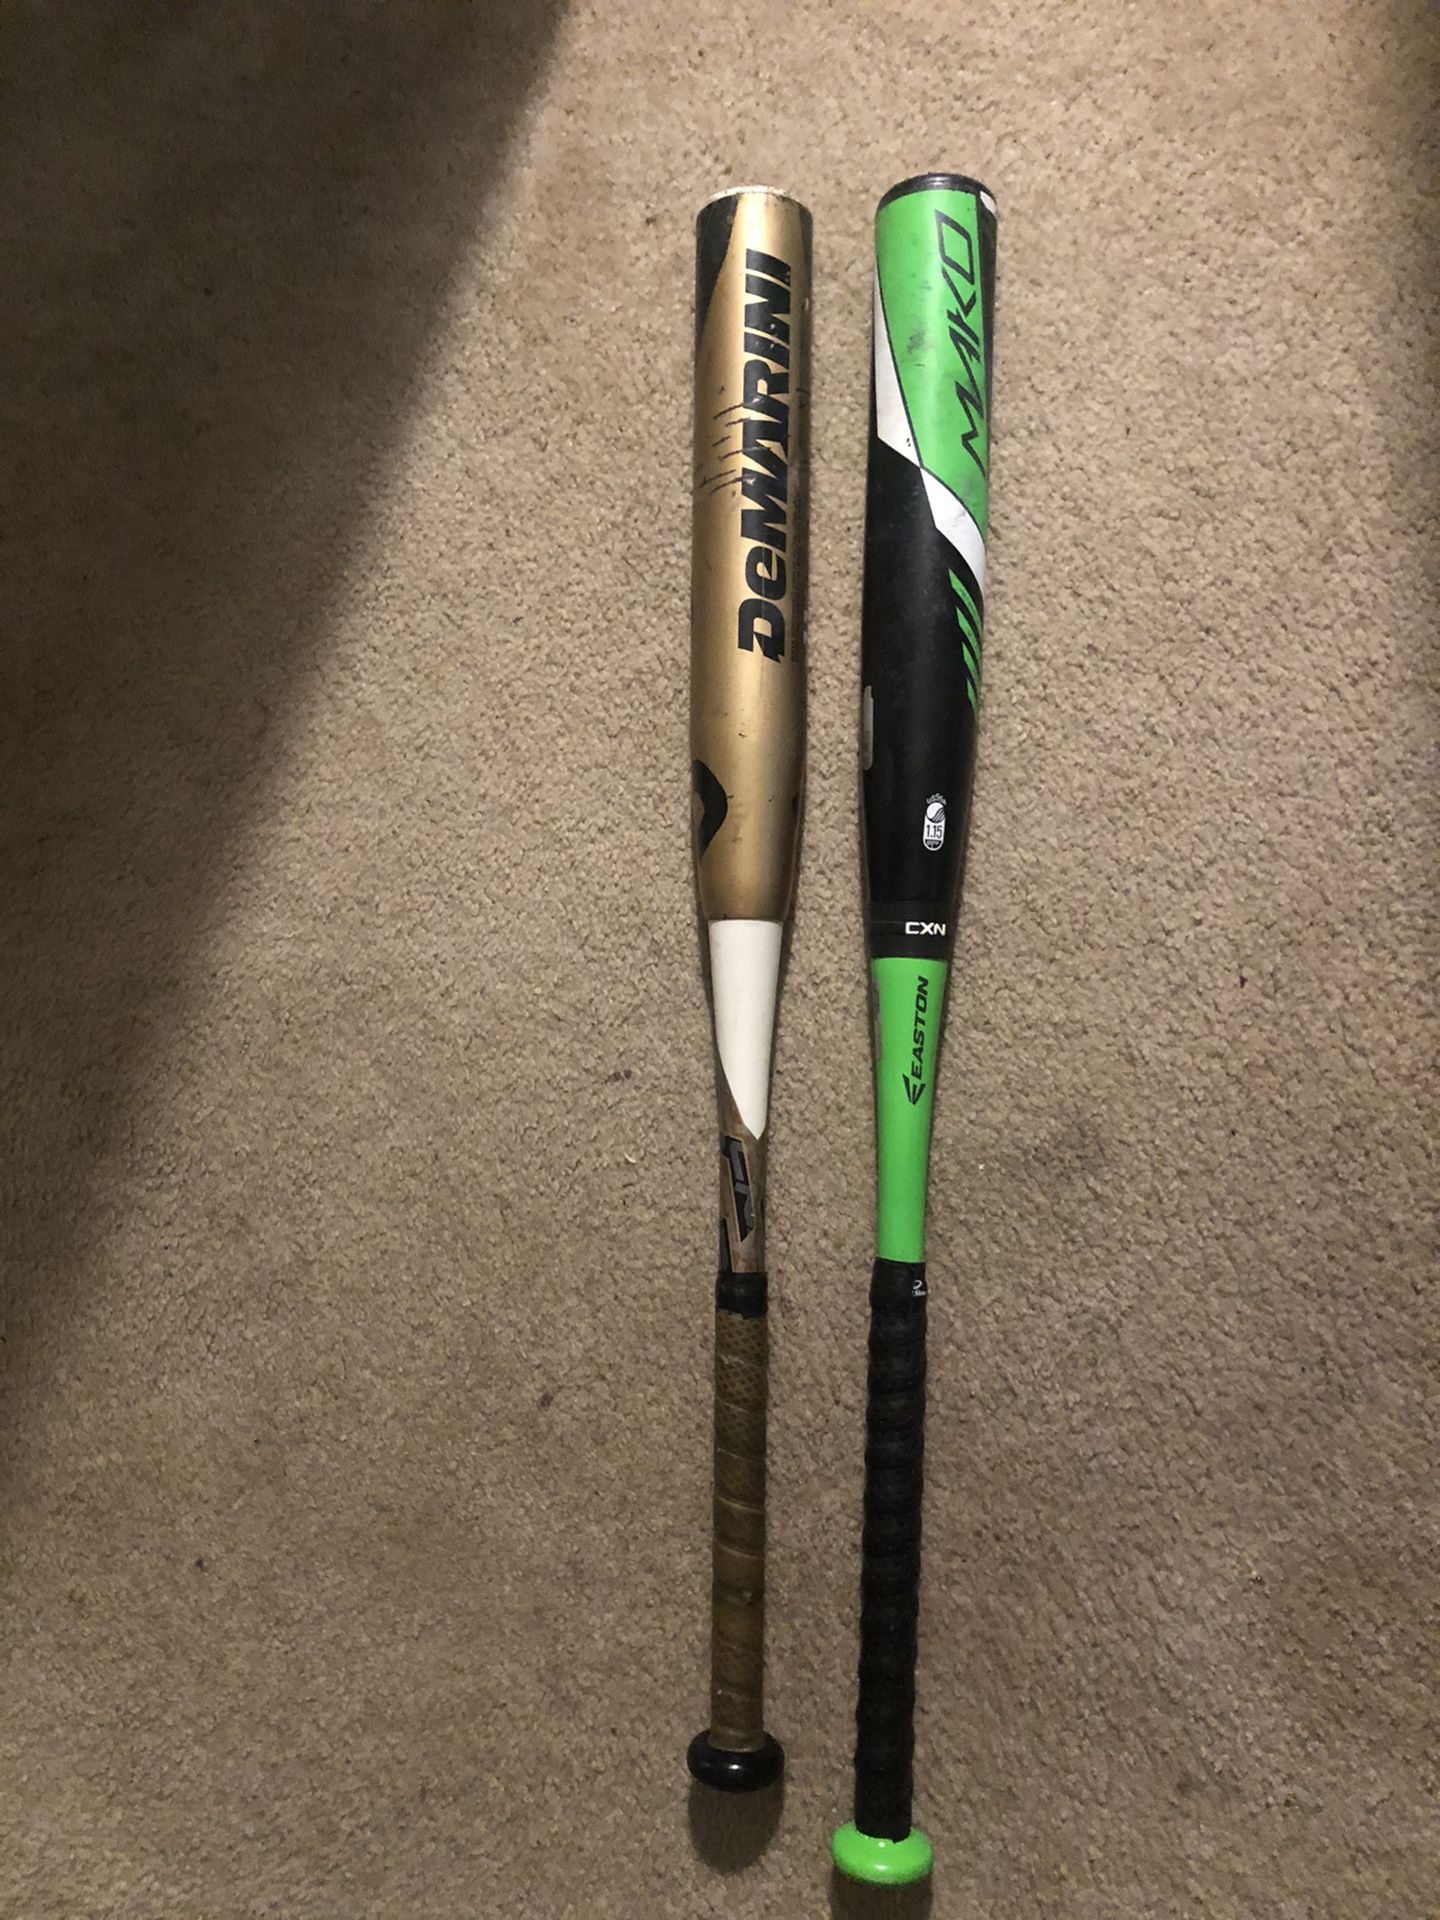 2 youth baseball bats. Easton Mako DeMarini CF5